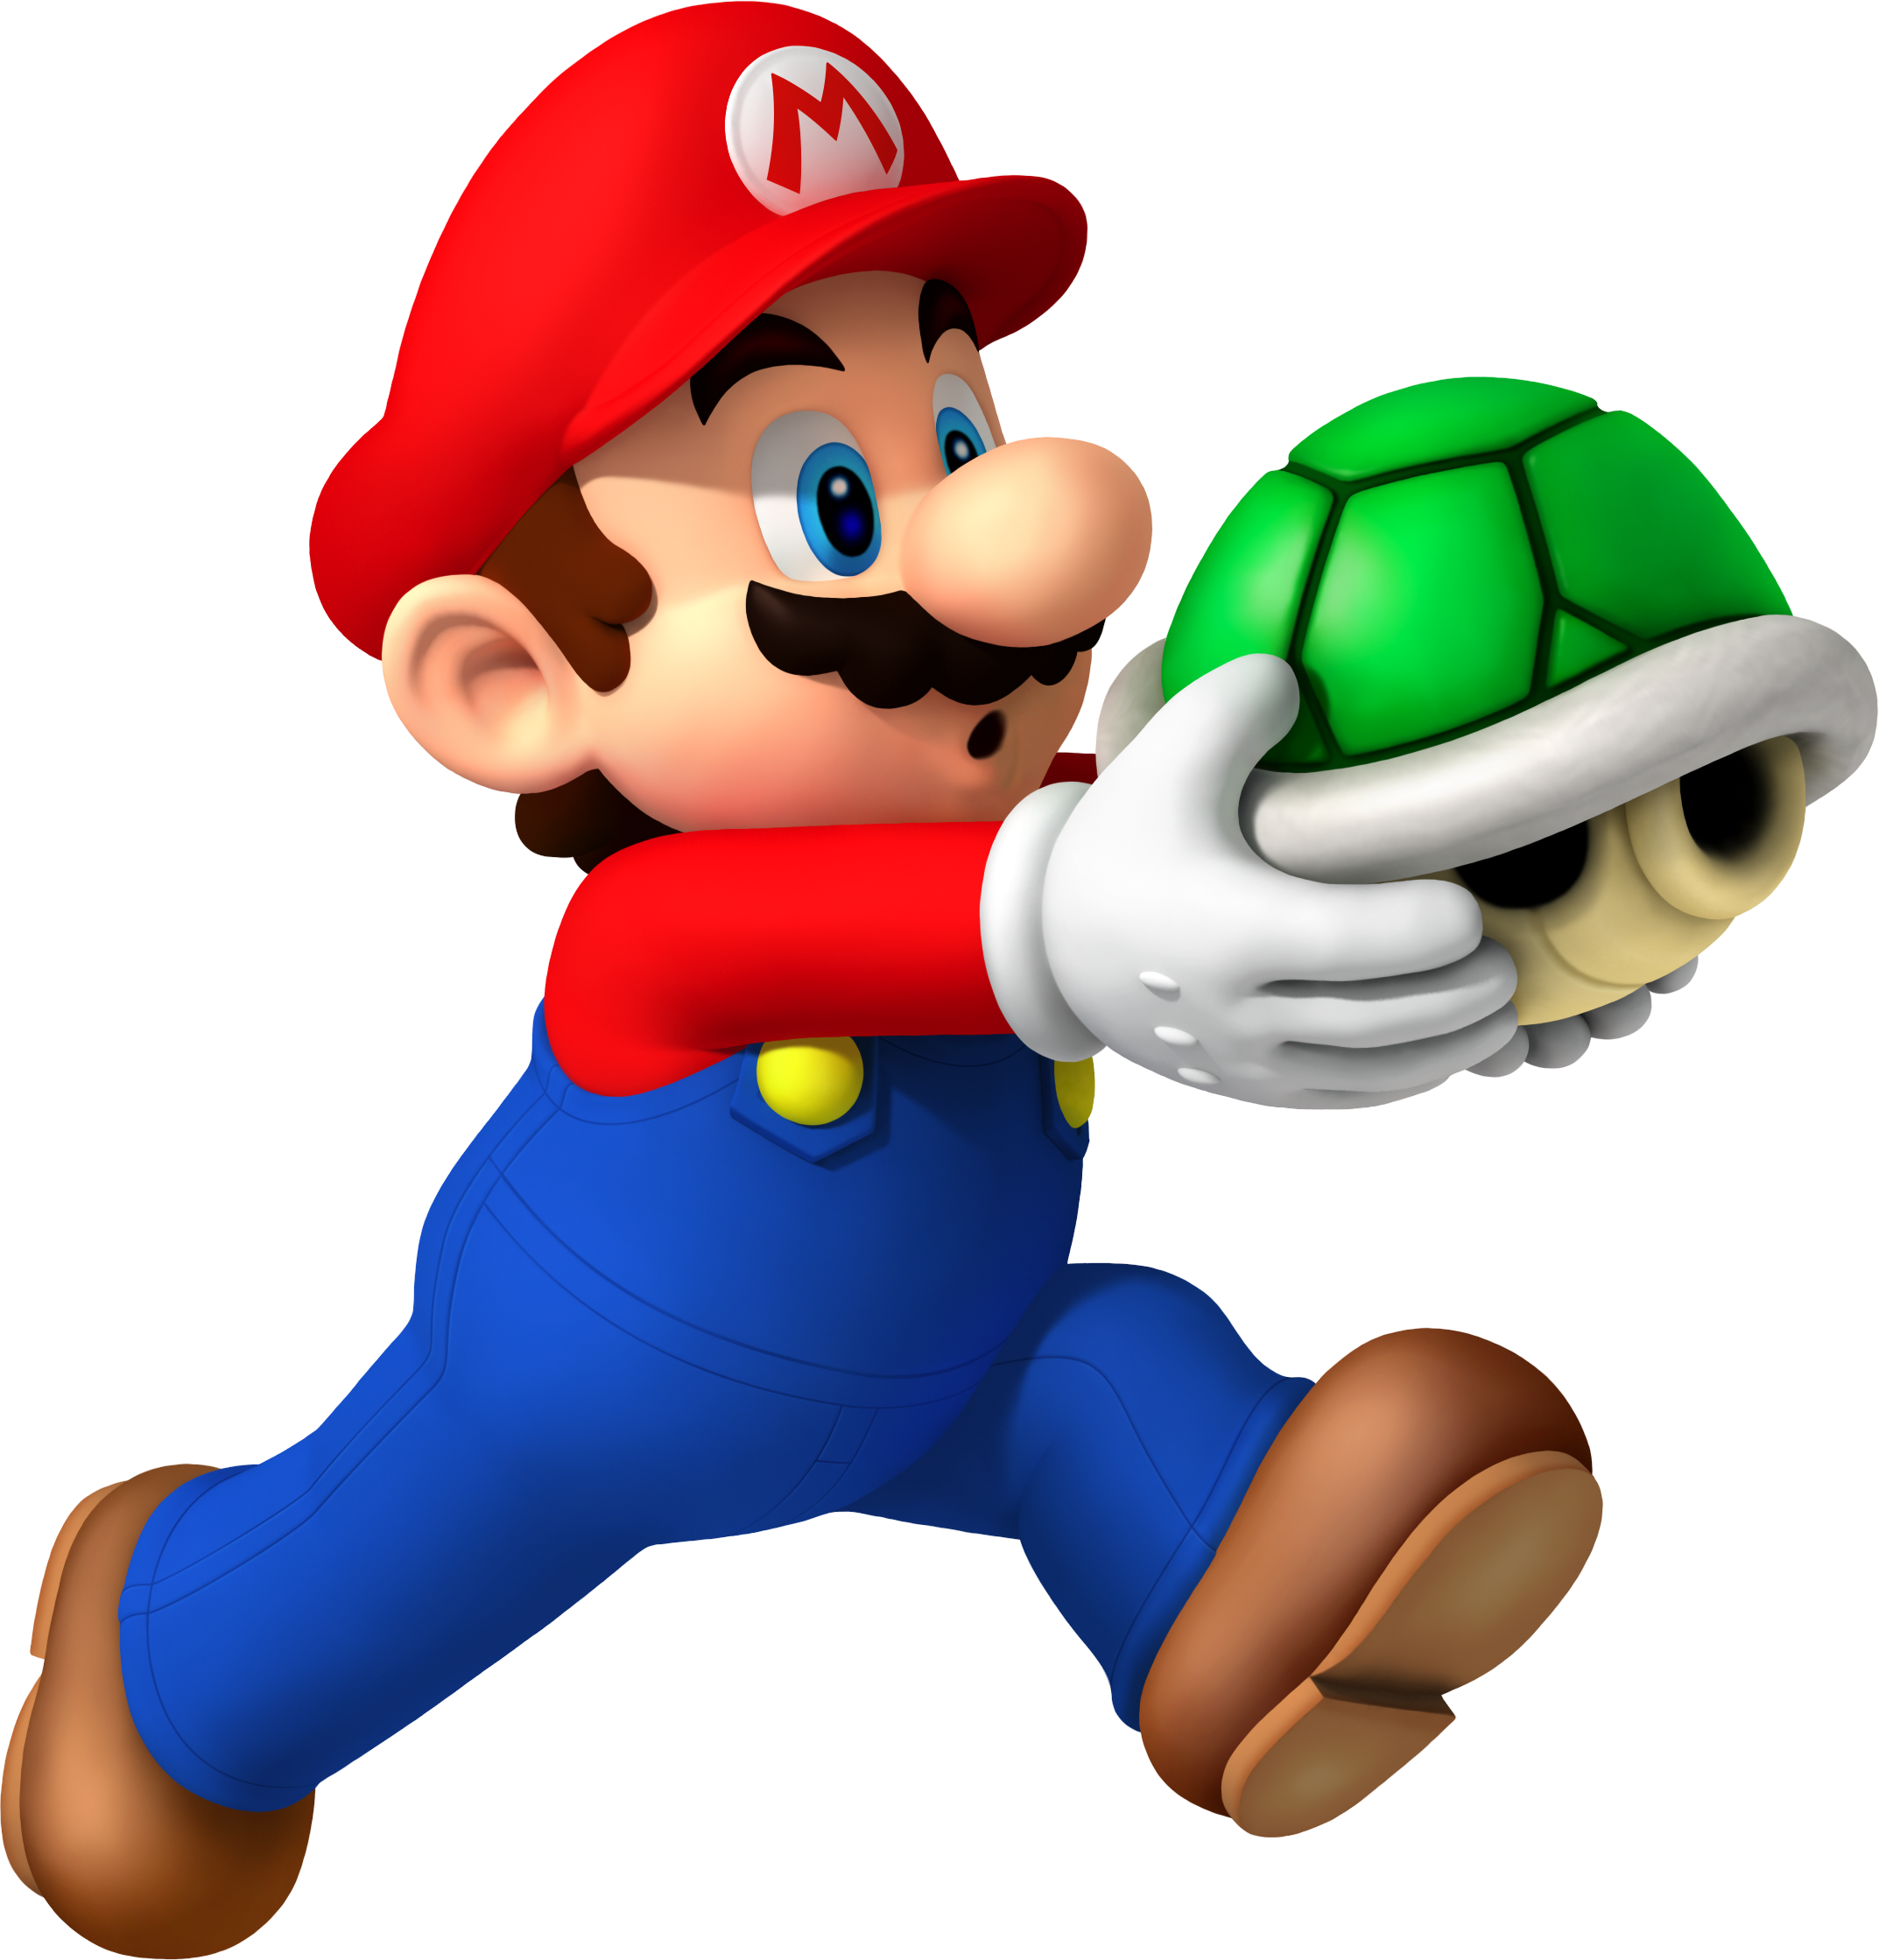 Mario bros advance. Супер Марио. Марио Нинтендо. Марио (персонаж игр). Супер Марио БРОС.